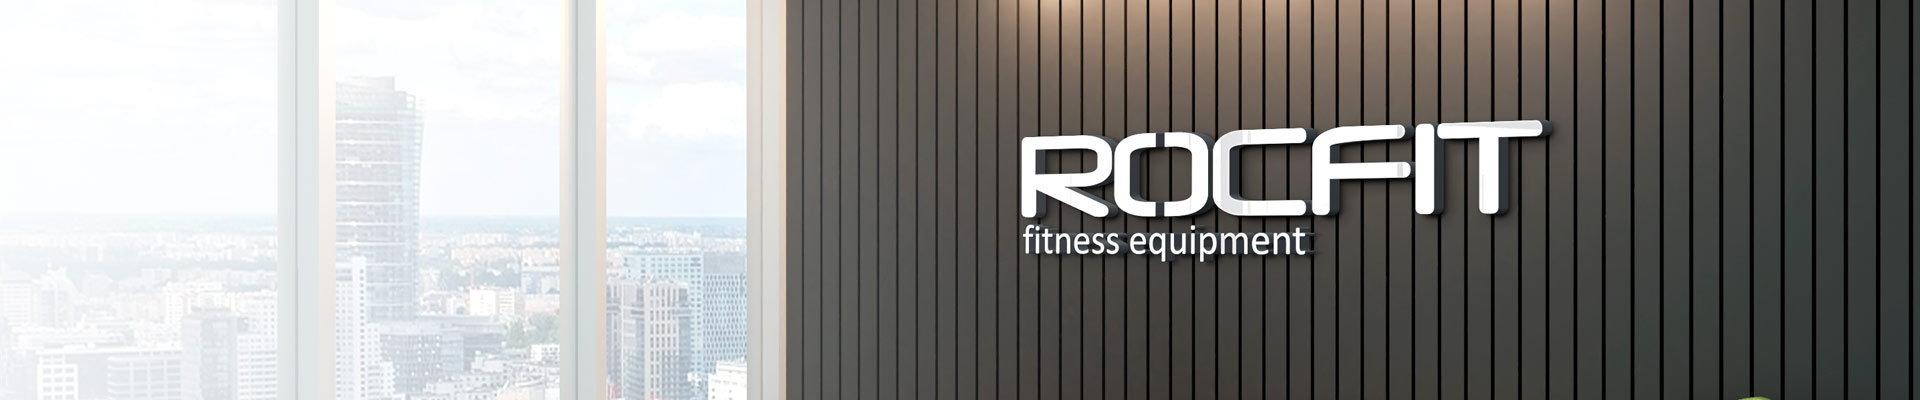 rocfit fitness